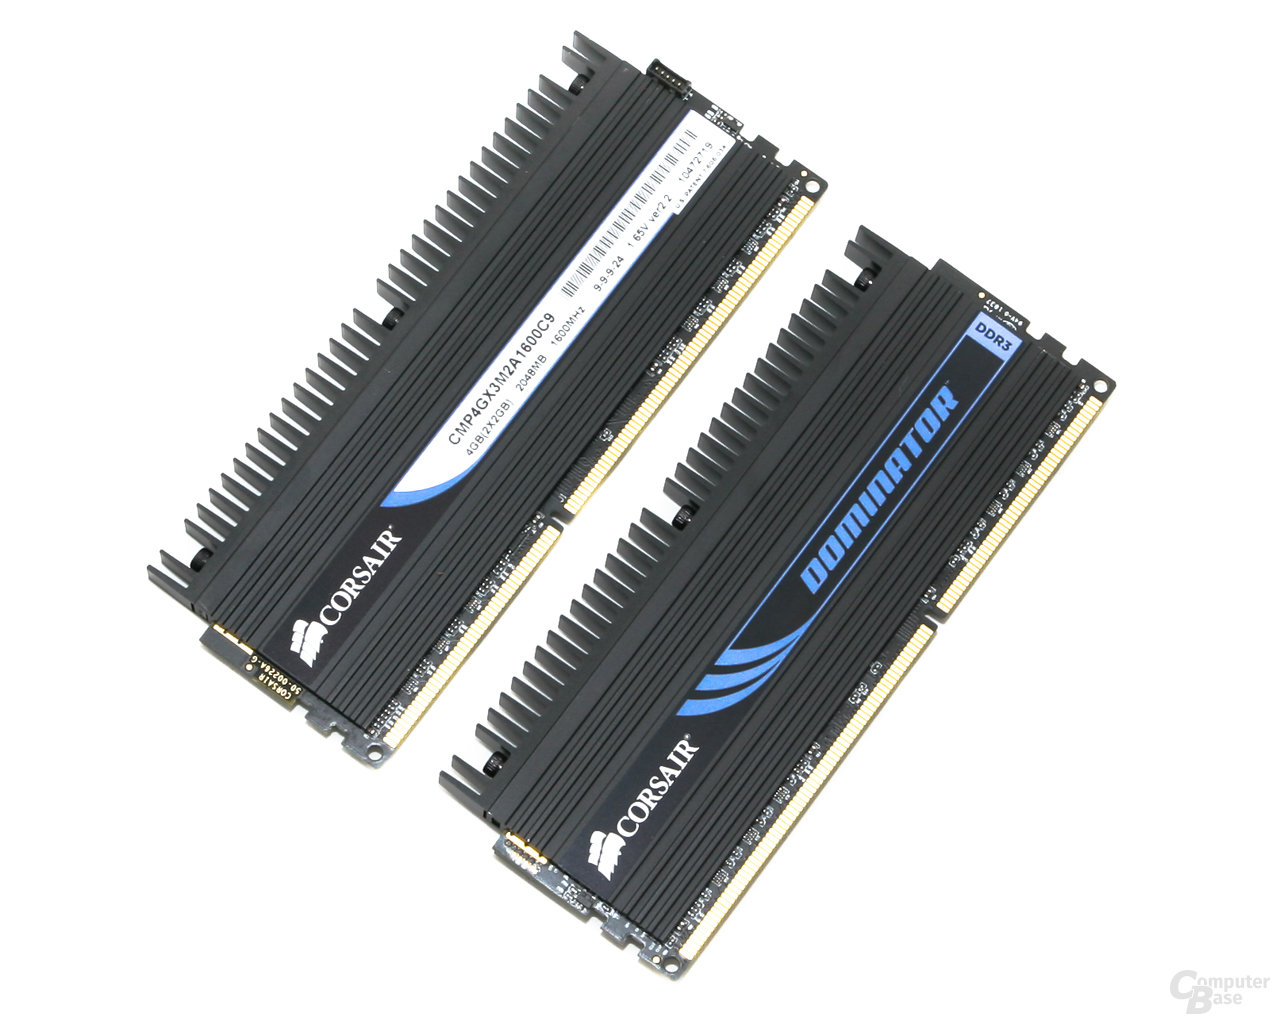 Corsair Dominator DDR3-1600